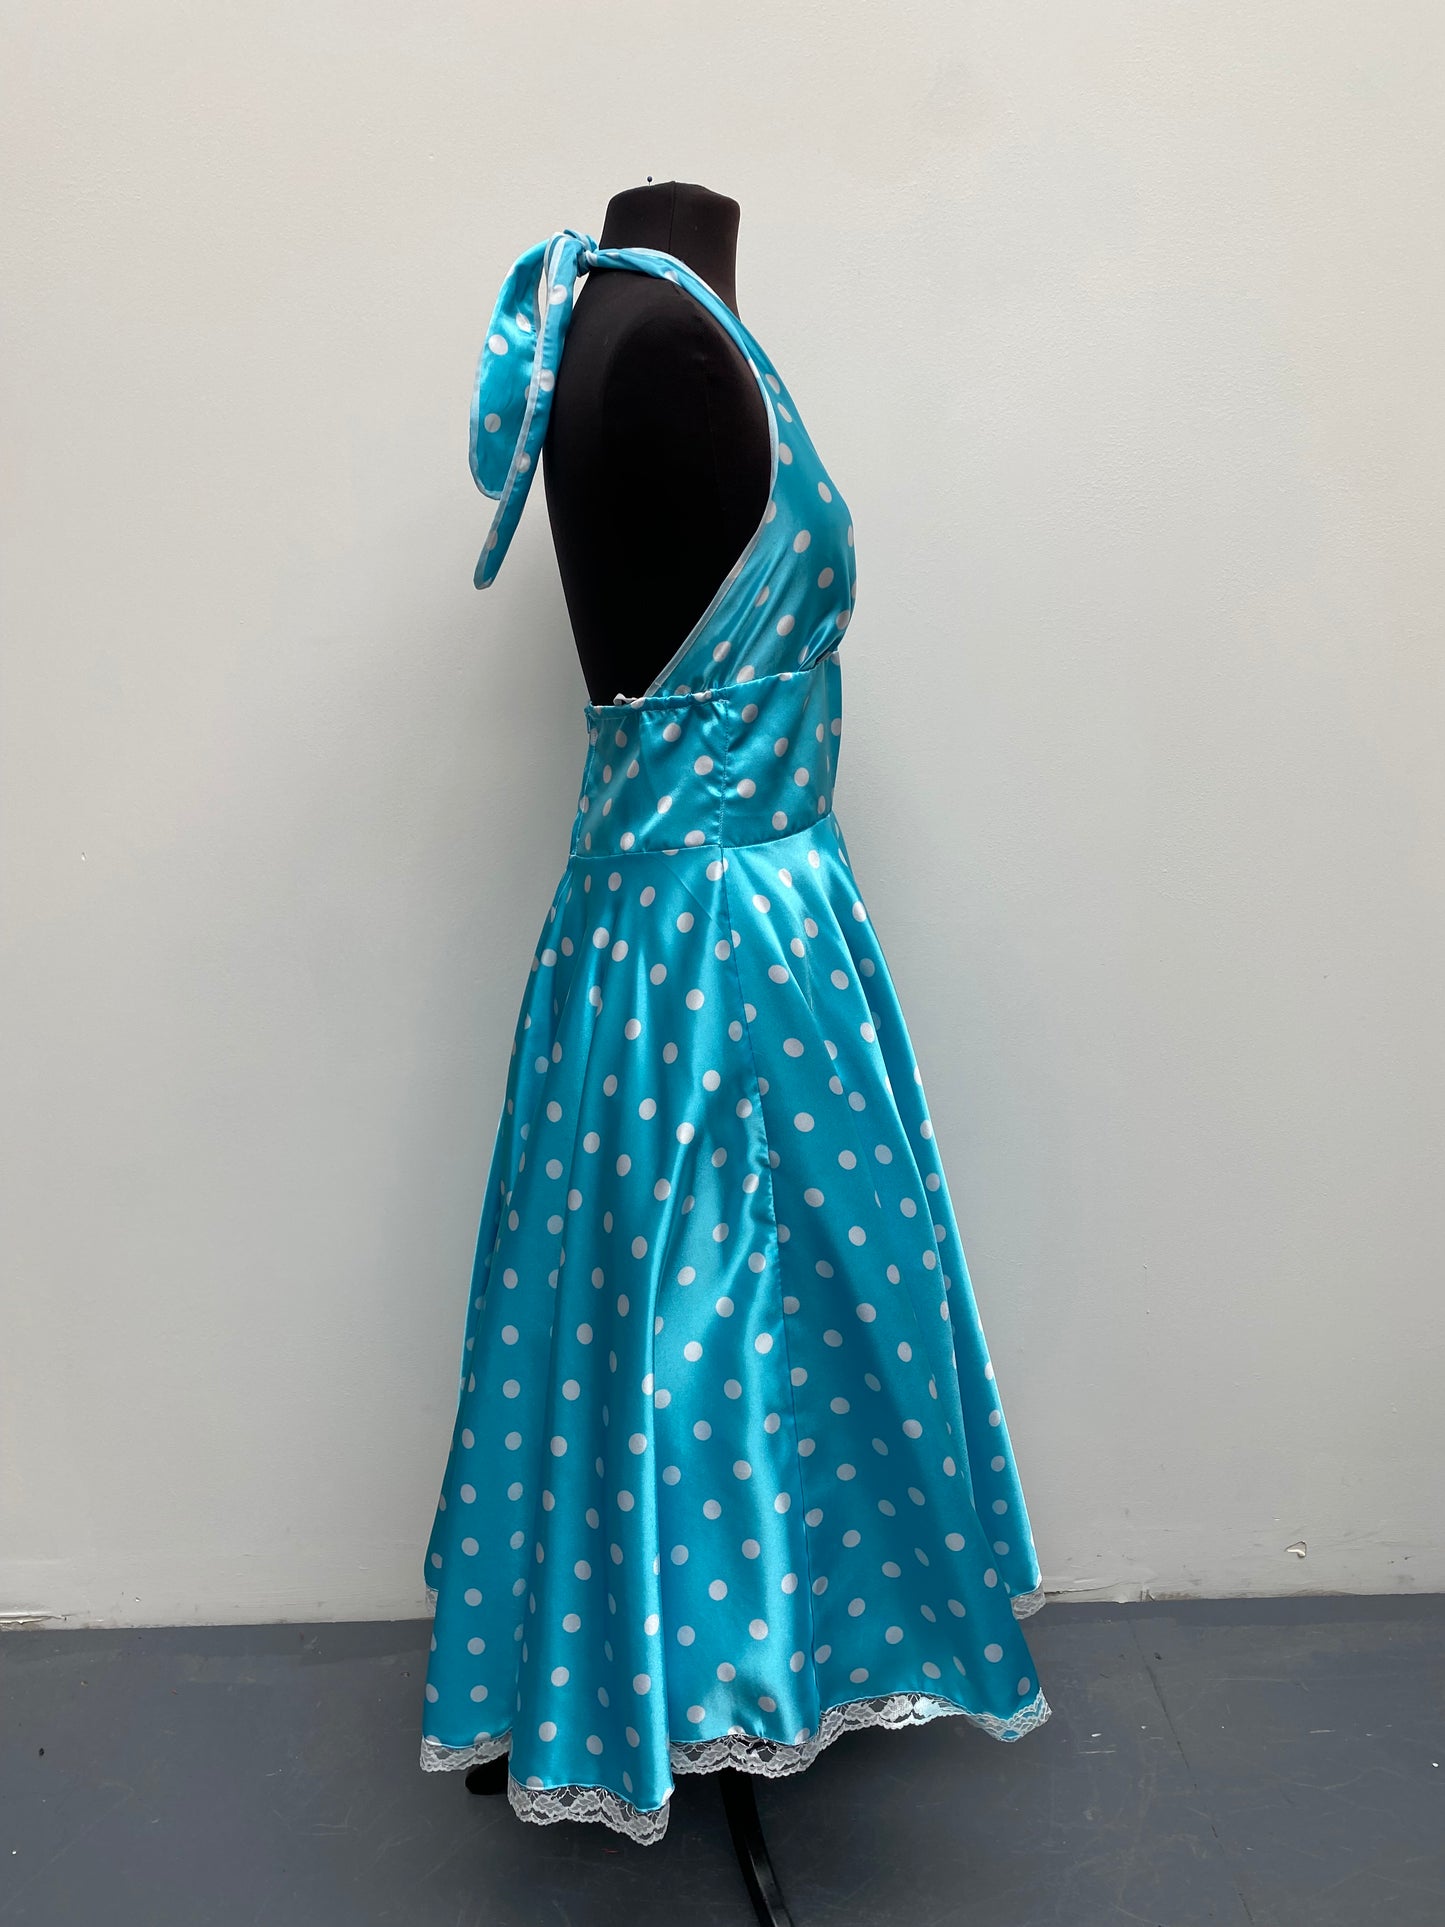 50s Light Blue Spotty Halter Neck Dress - Ex Hire Fancy Dress Costume